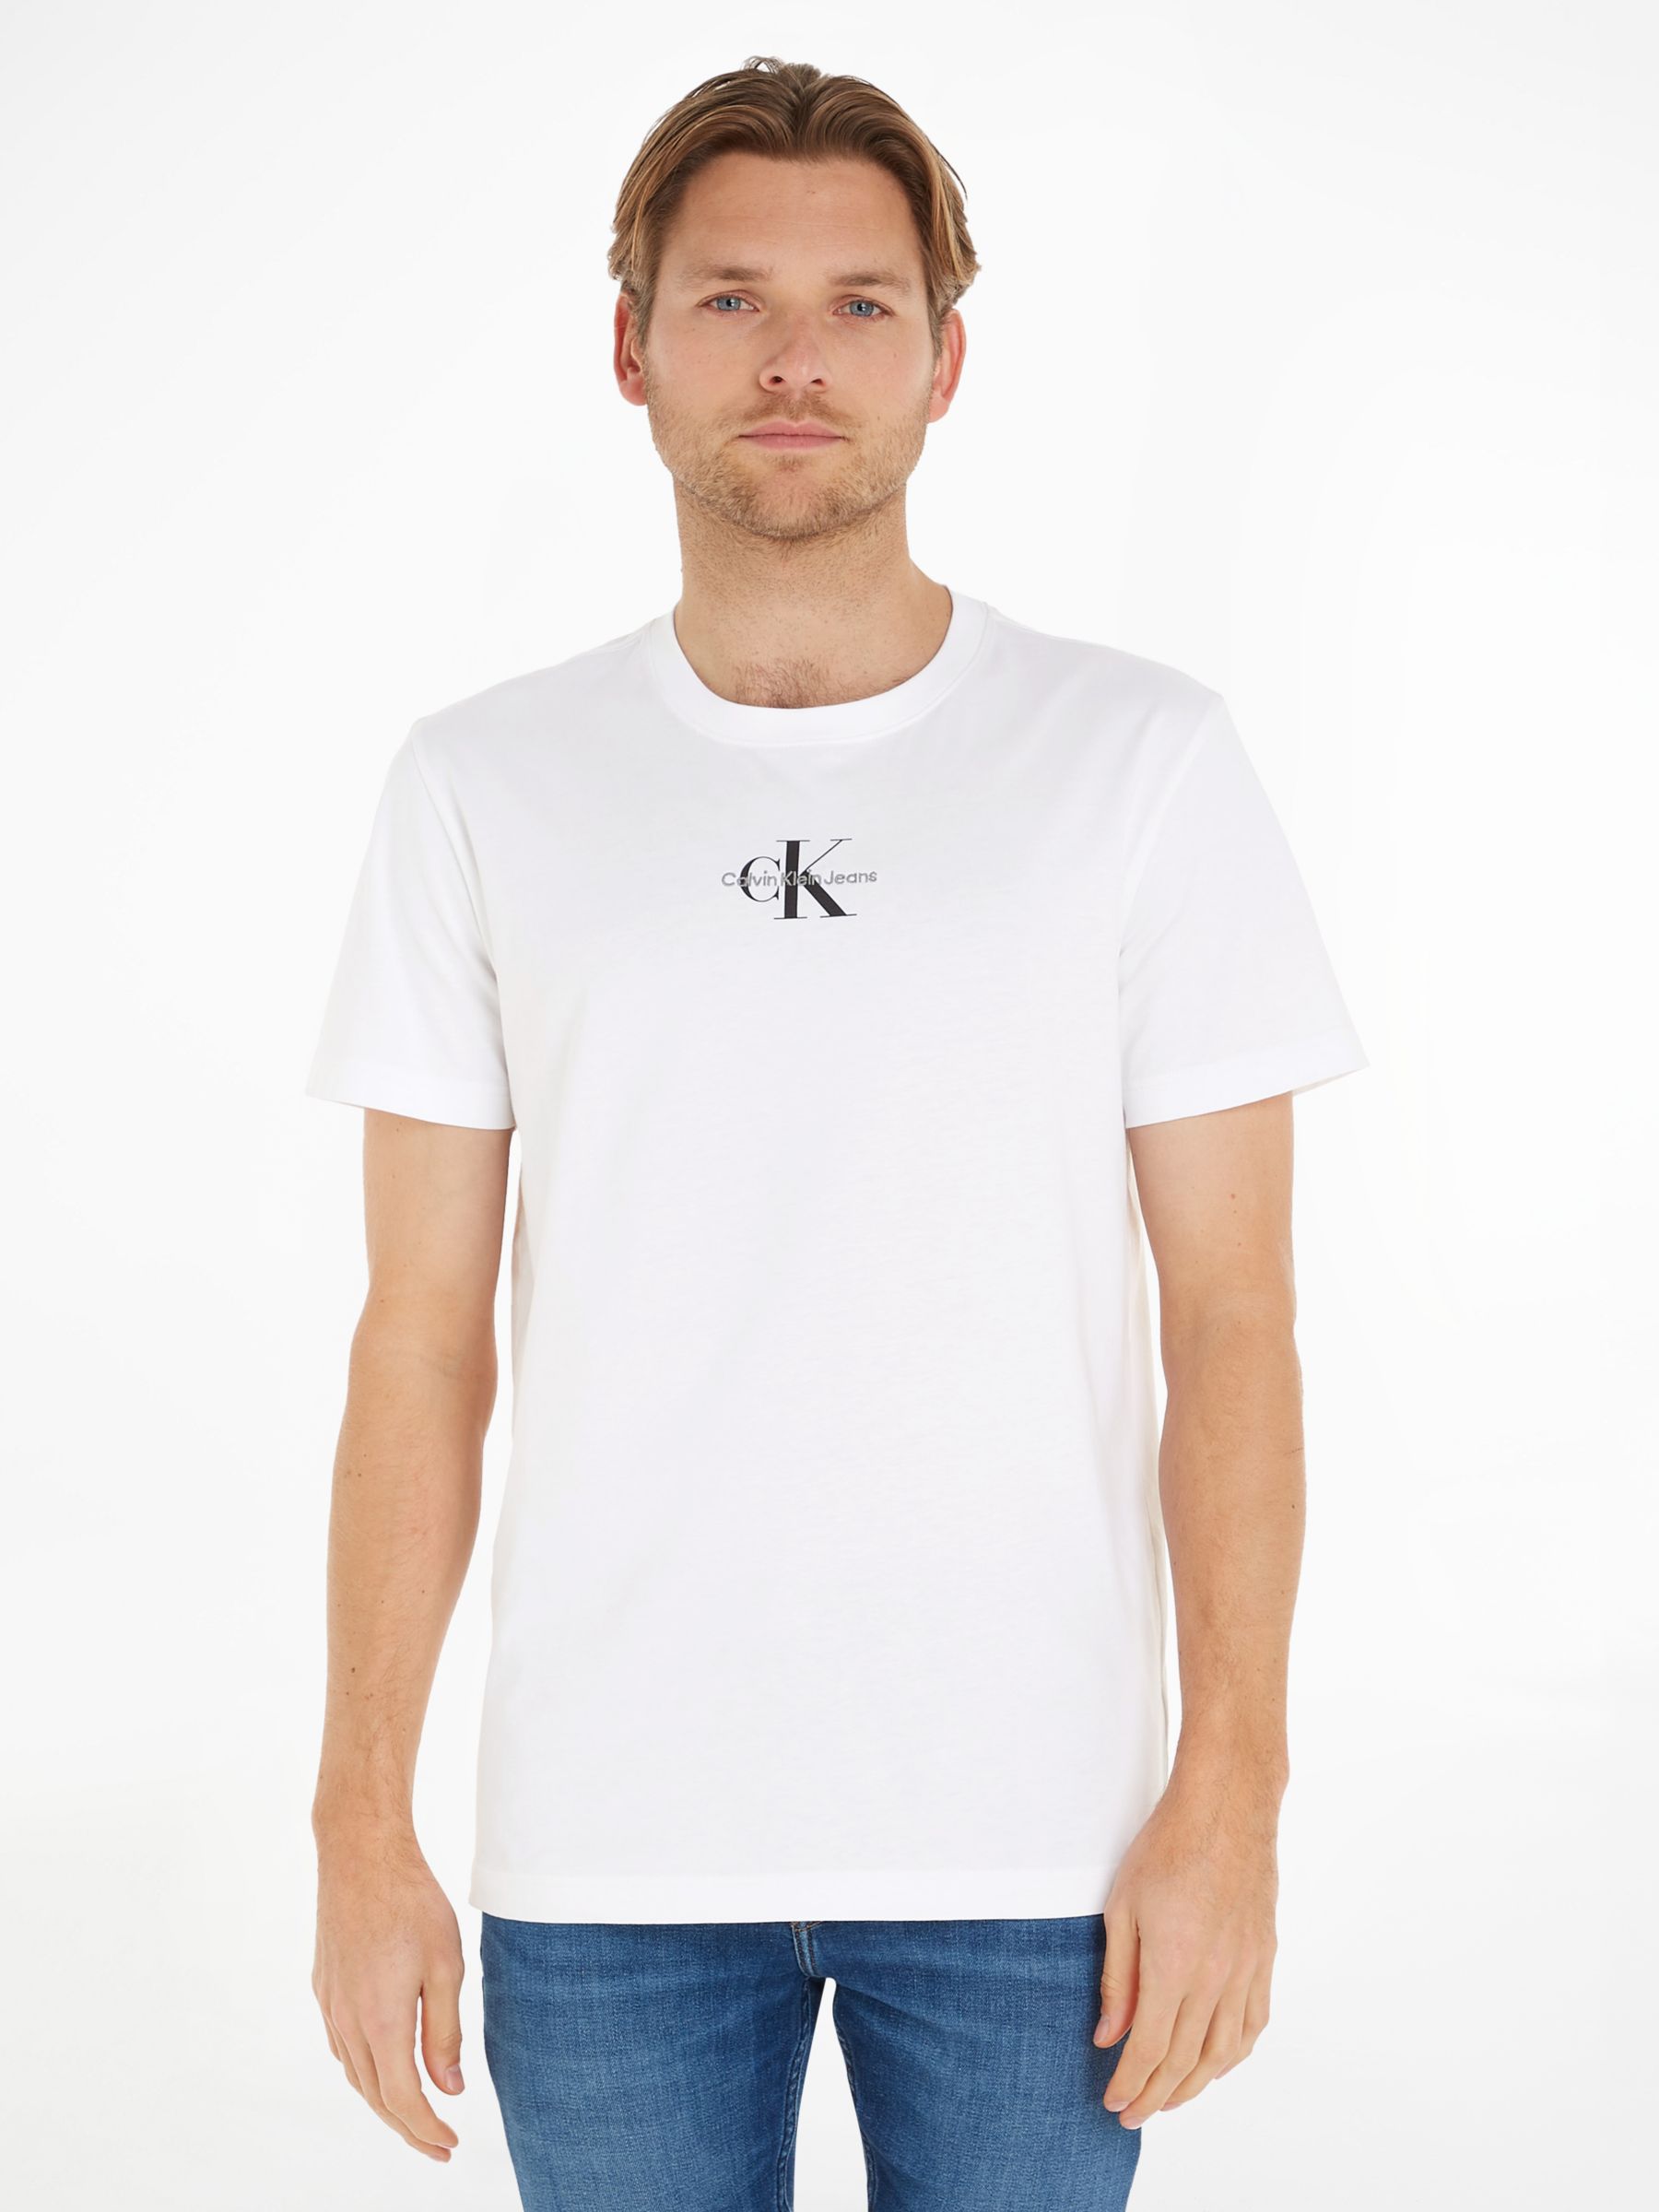 Plain Men\'s T-Shirts from Calvin Klein | John Lewis & Partners